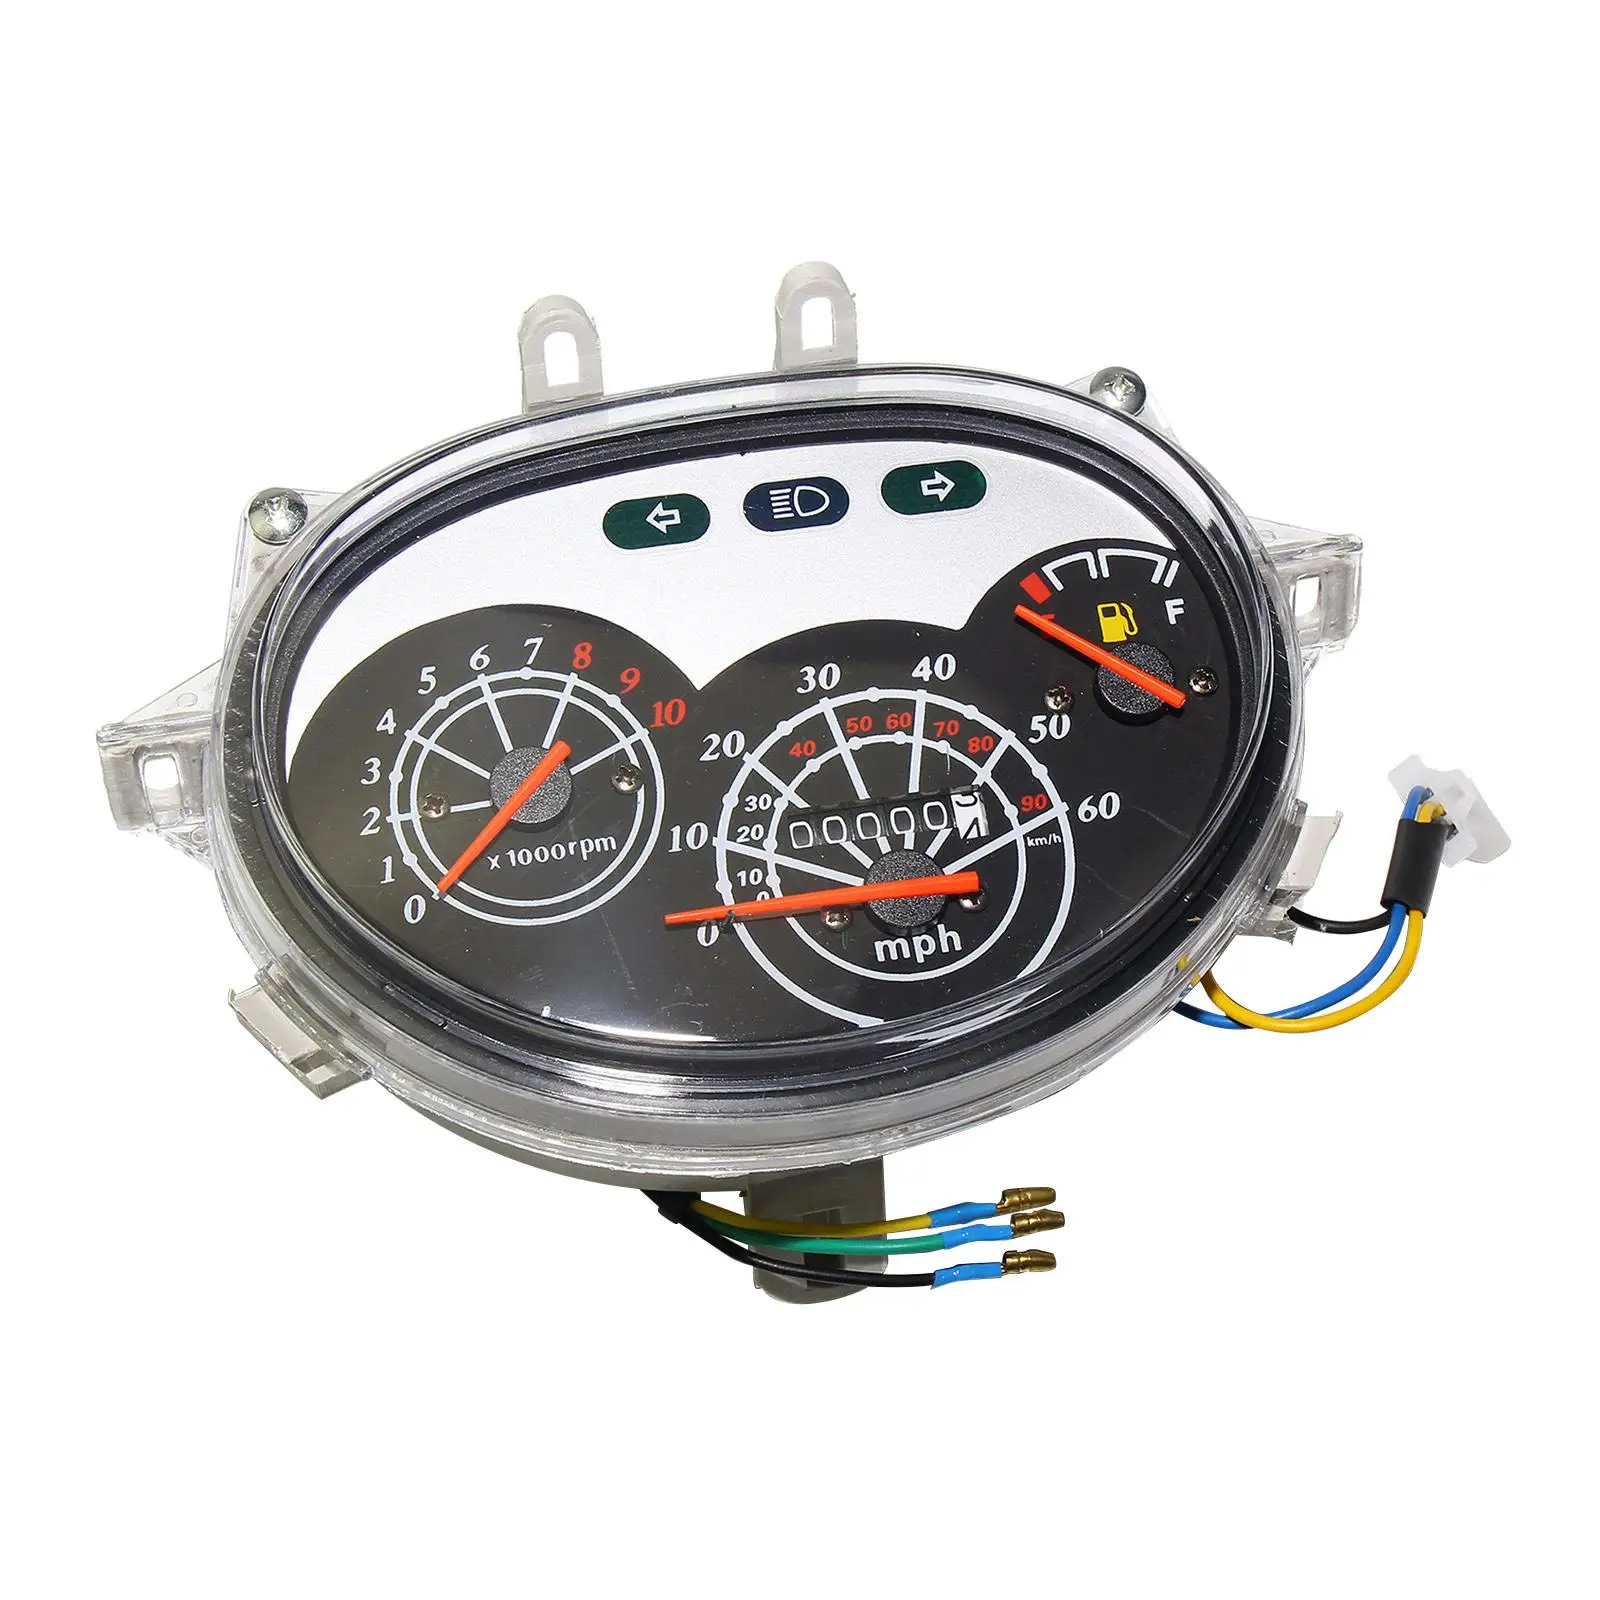 Motorcycle Dashboard Speedometer Universal Speed Instrument Plug and Play Odometer Meter Tachometer Motorbike Parts Accessories